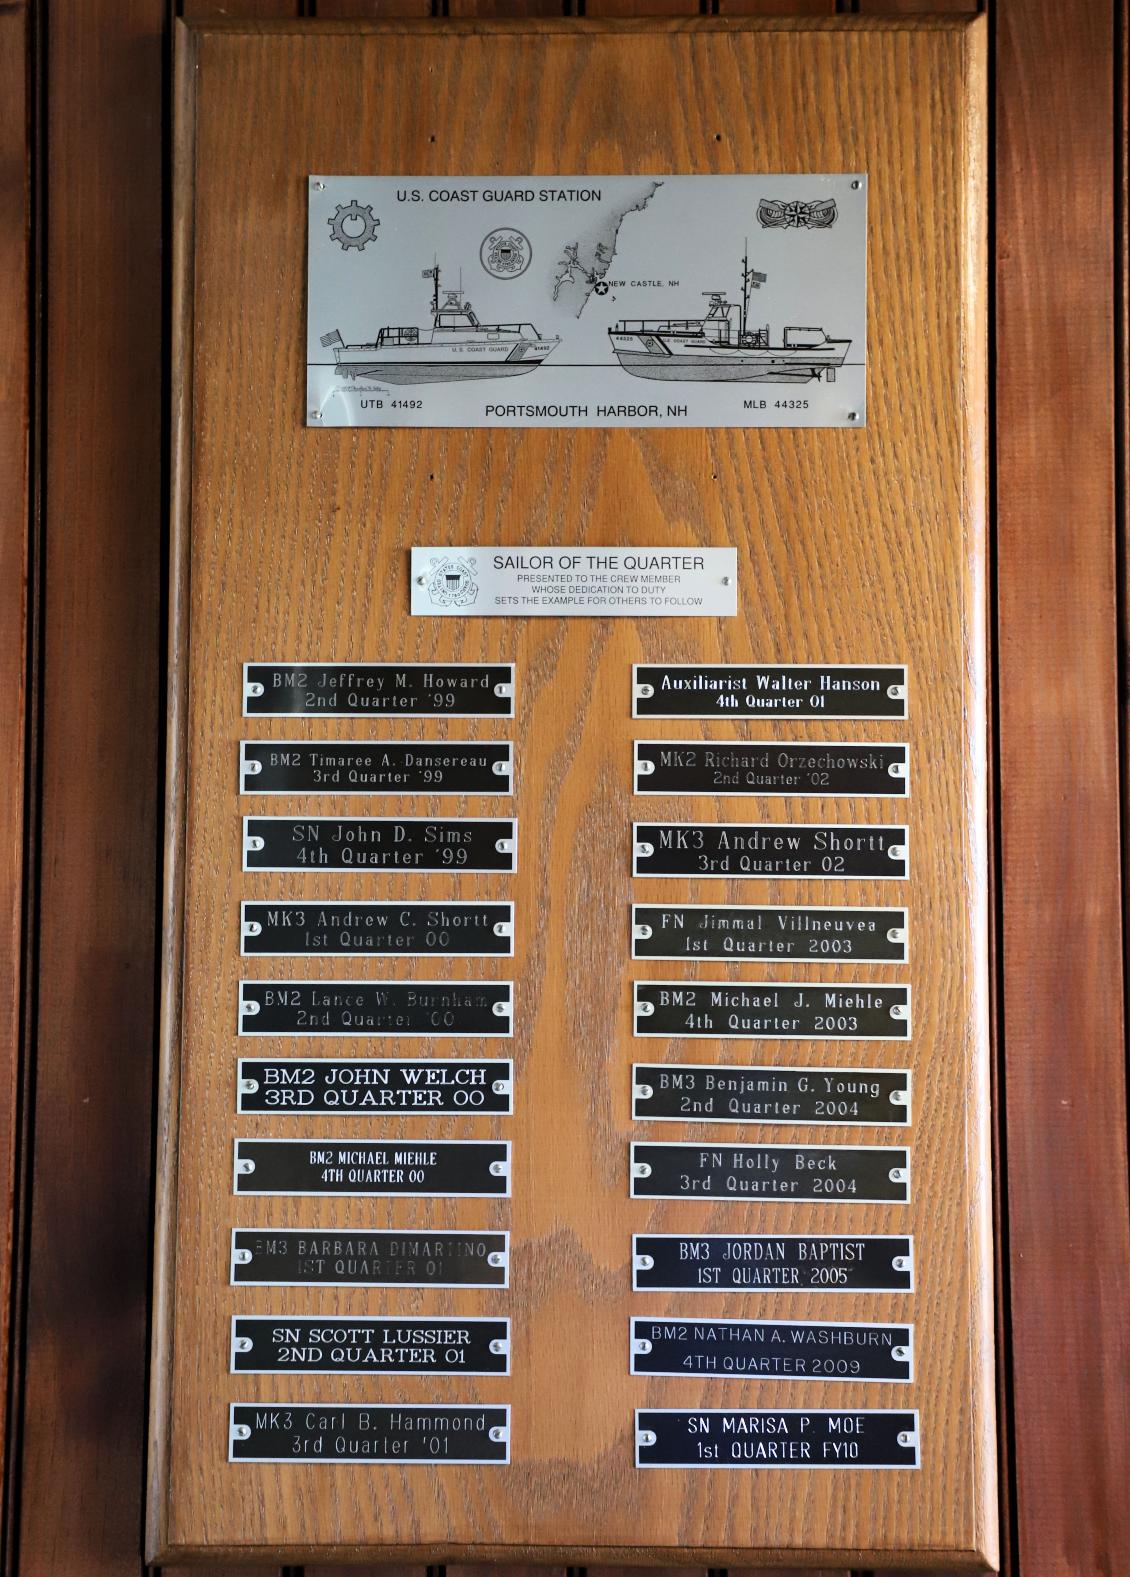 Portsmouth Harbor Coast Guard Station, New Castle New Hampshire - Sailor of the Quarter Award 1999 - 2010